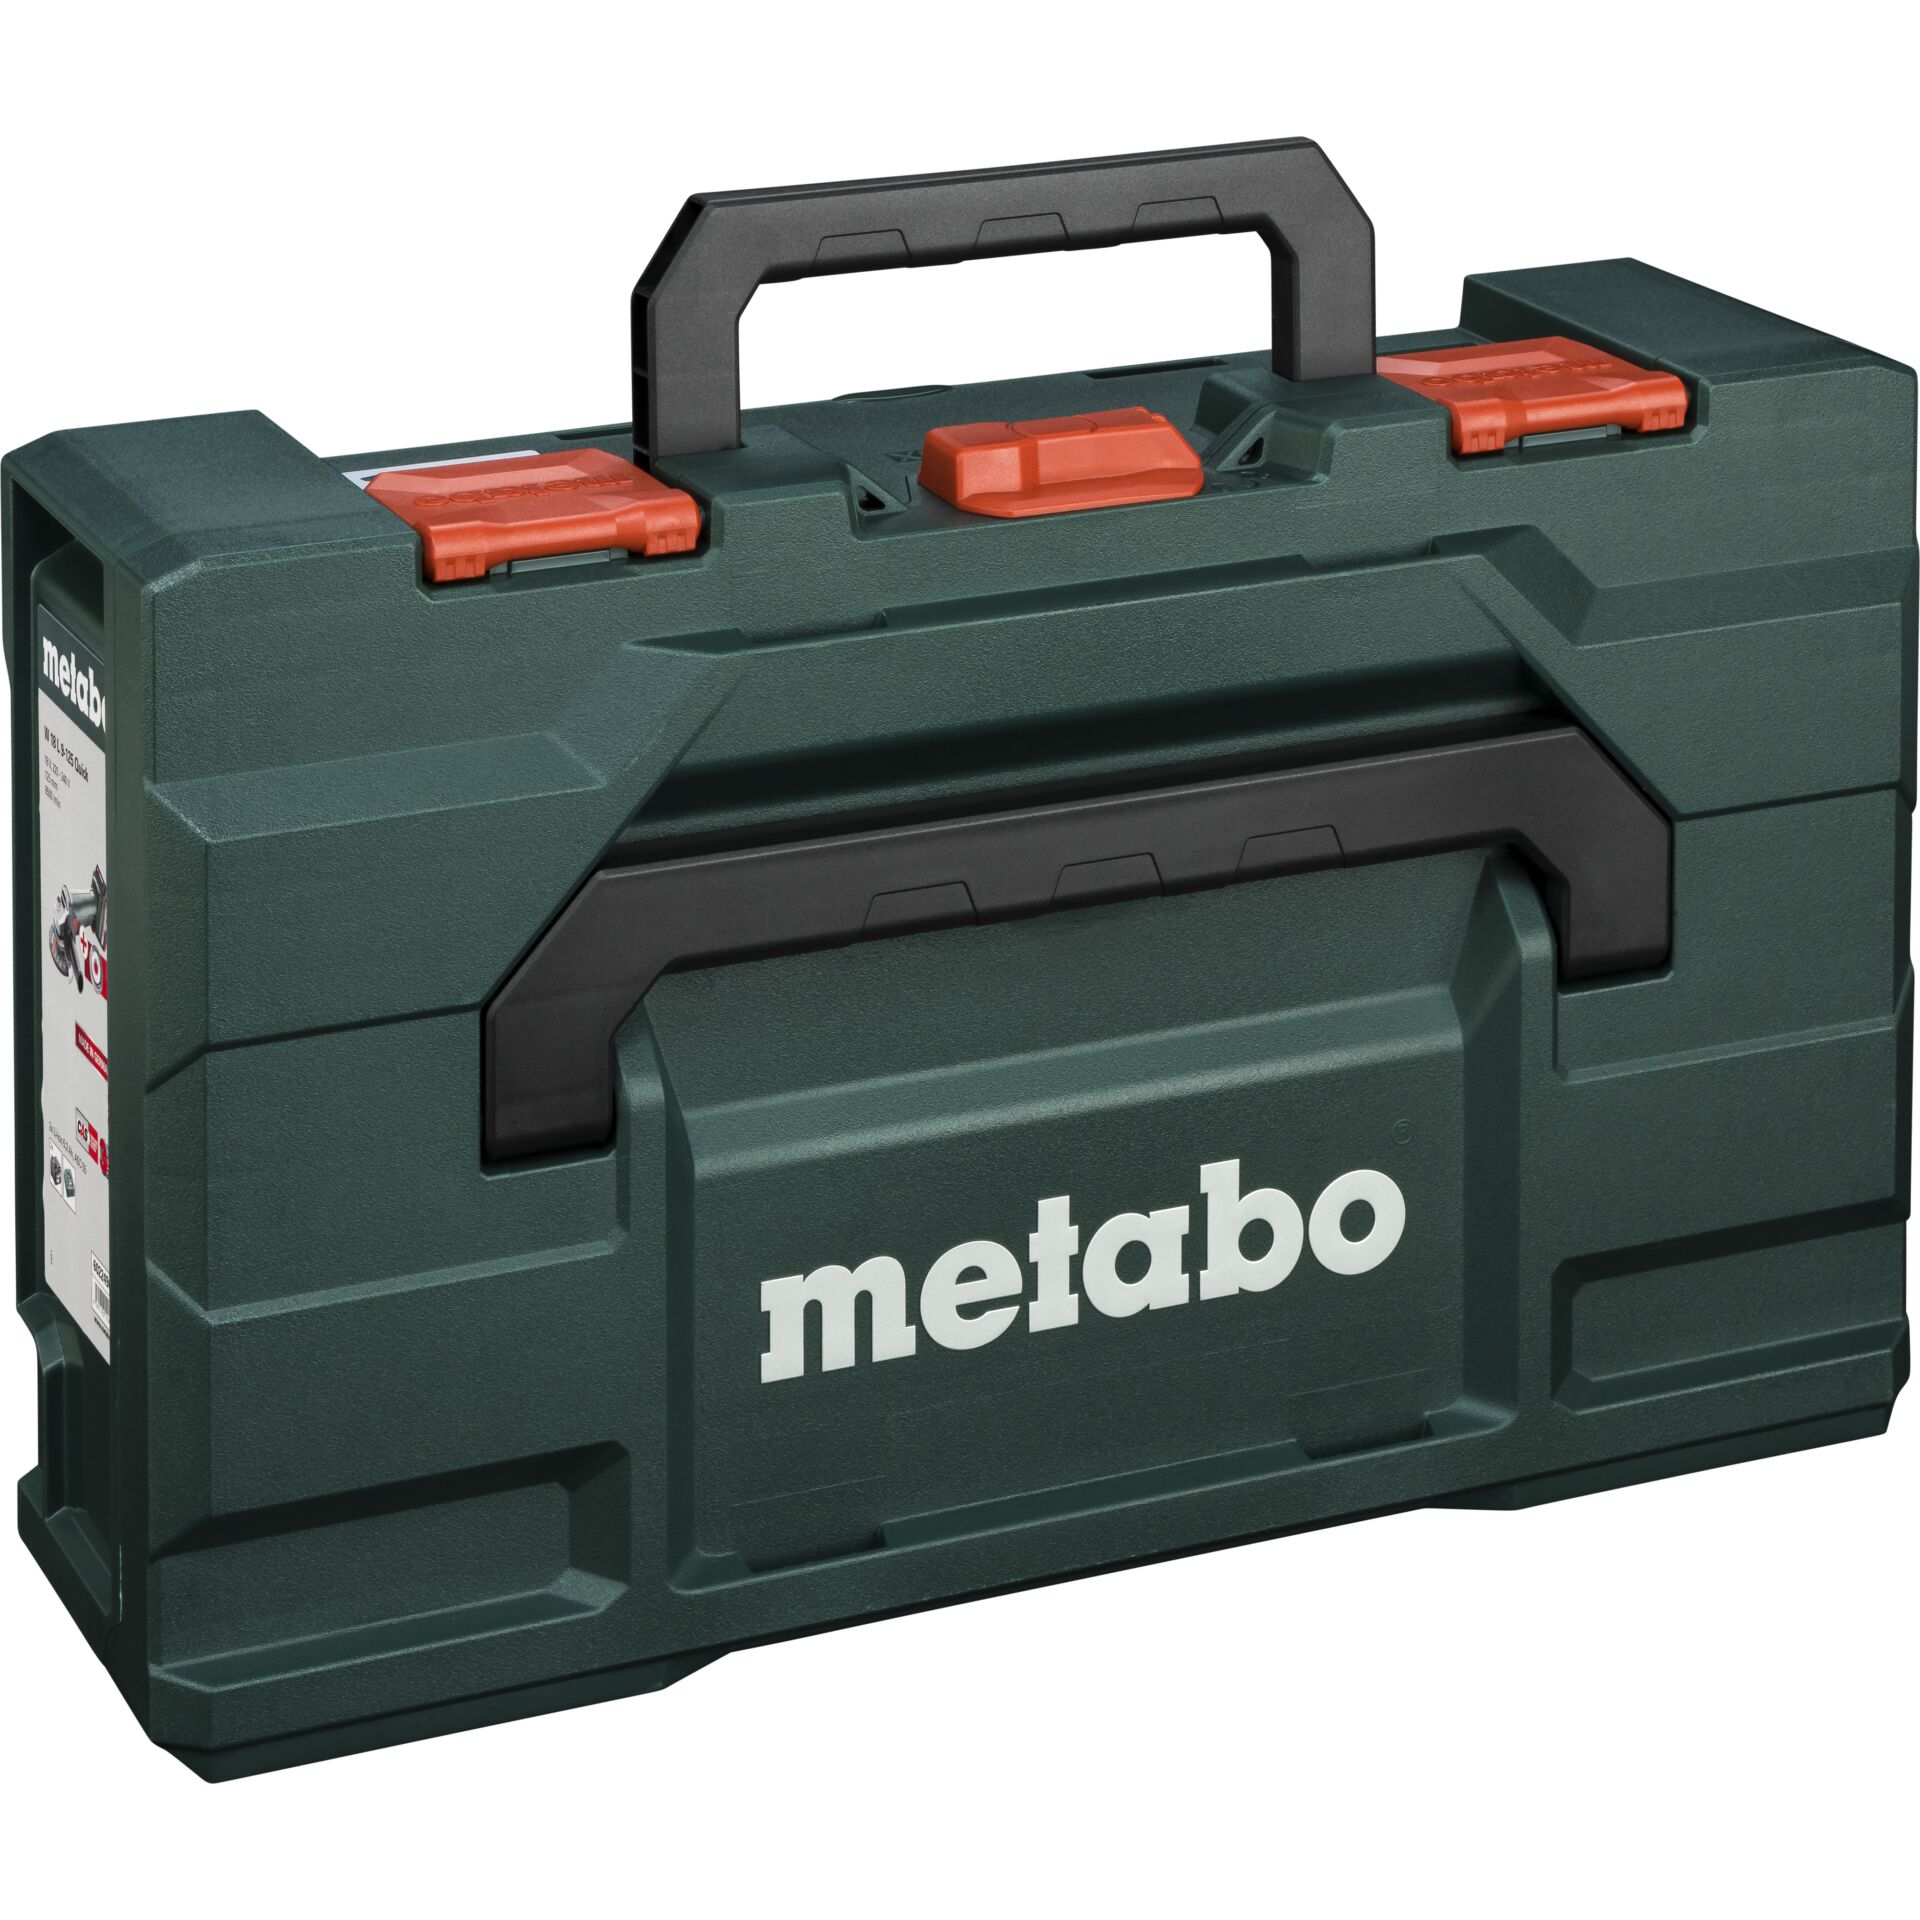 Metabo -602249650 Hardware/Electronic W -Metabo (602249650) L 9-125 18 Quick